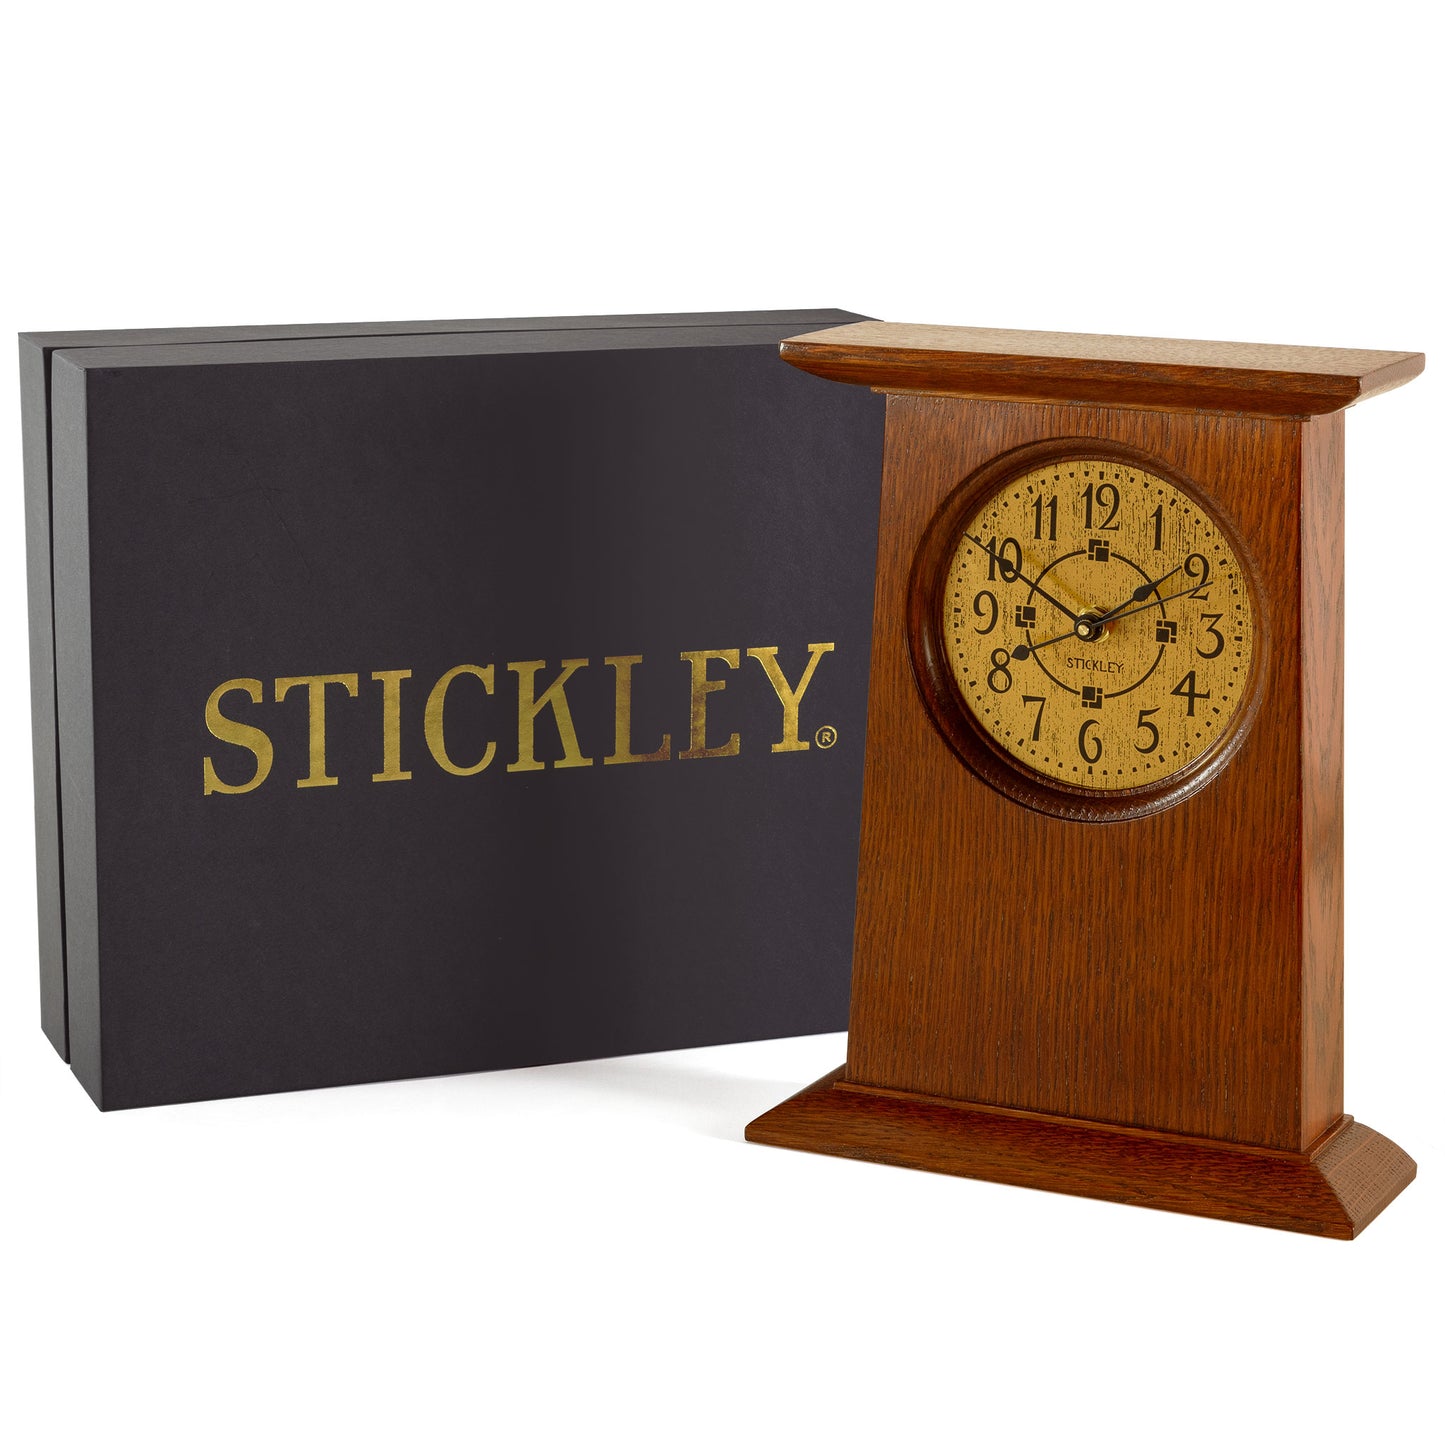 Mission Oak Mantel Clock